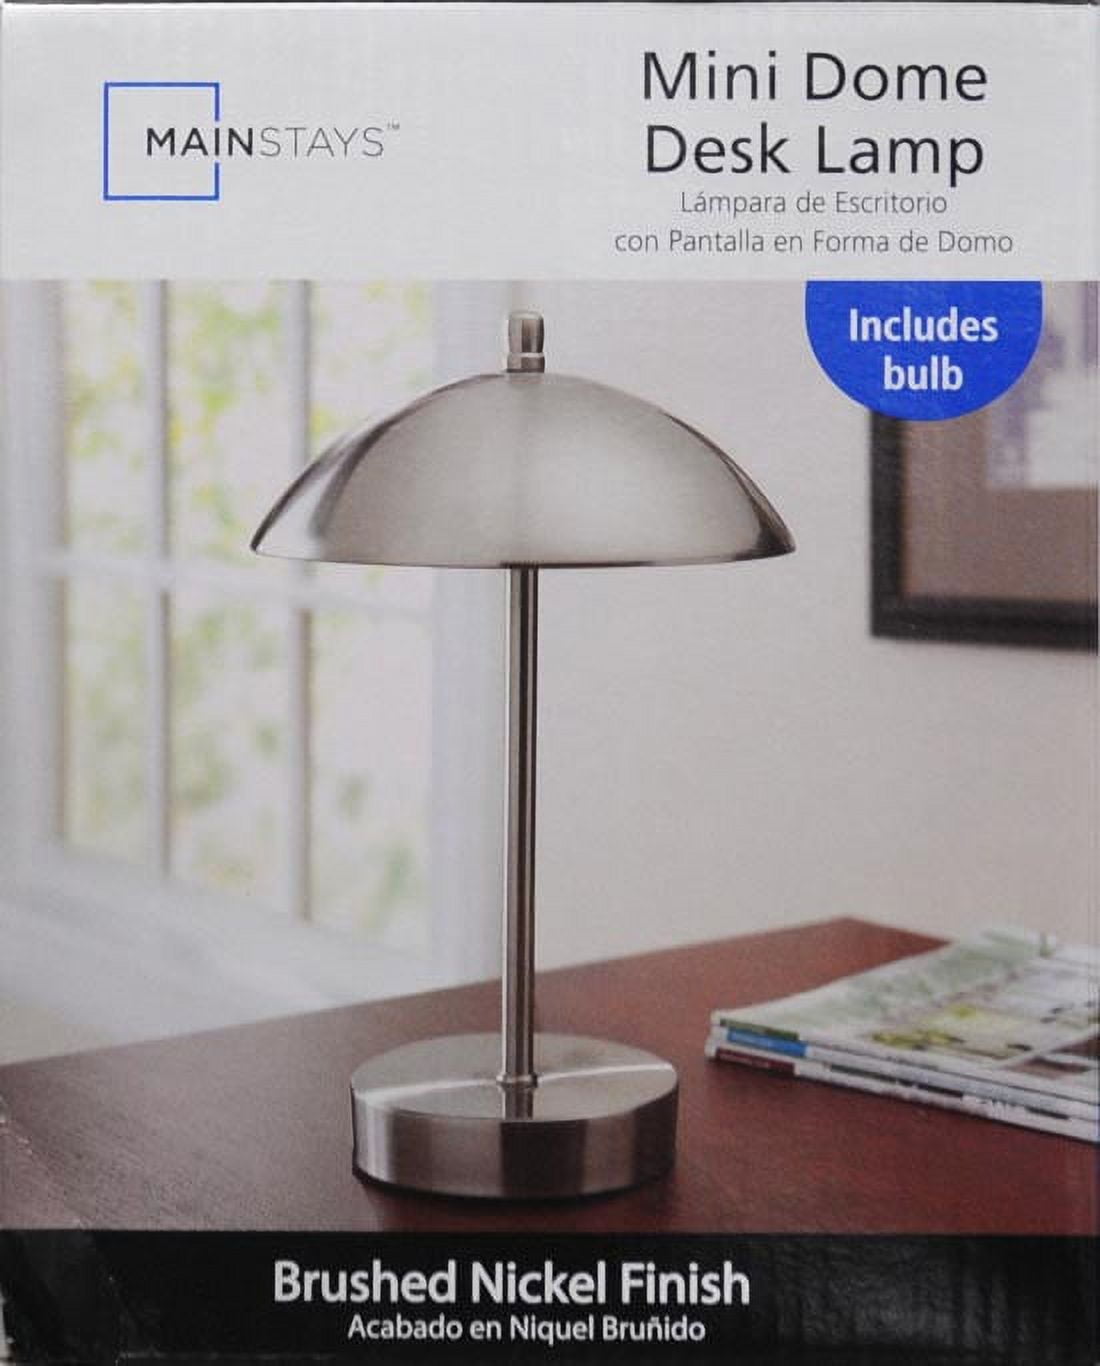 Table Lamp, E27 cap, without bulb, stone base, D170mm, V-TAC 